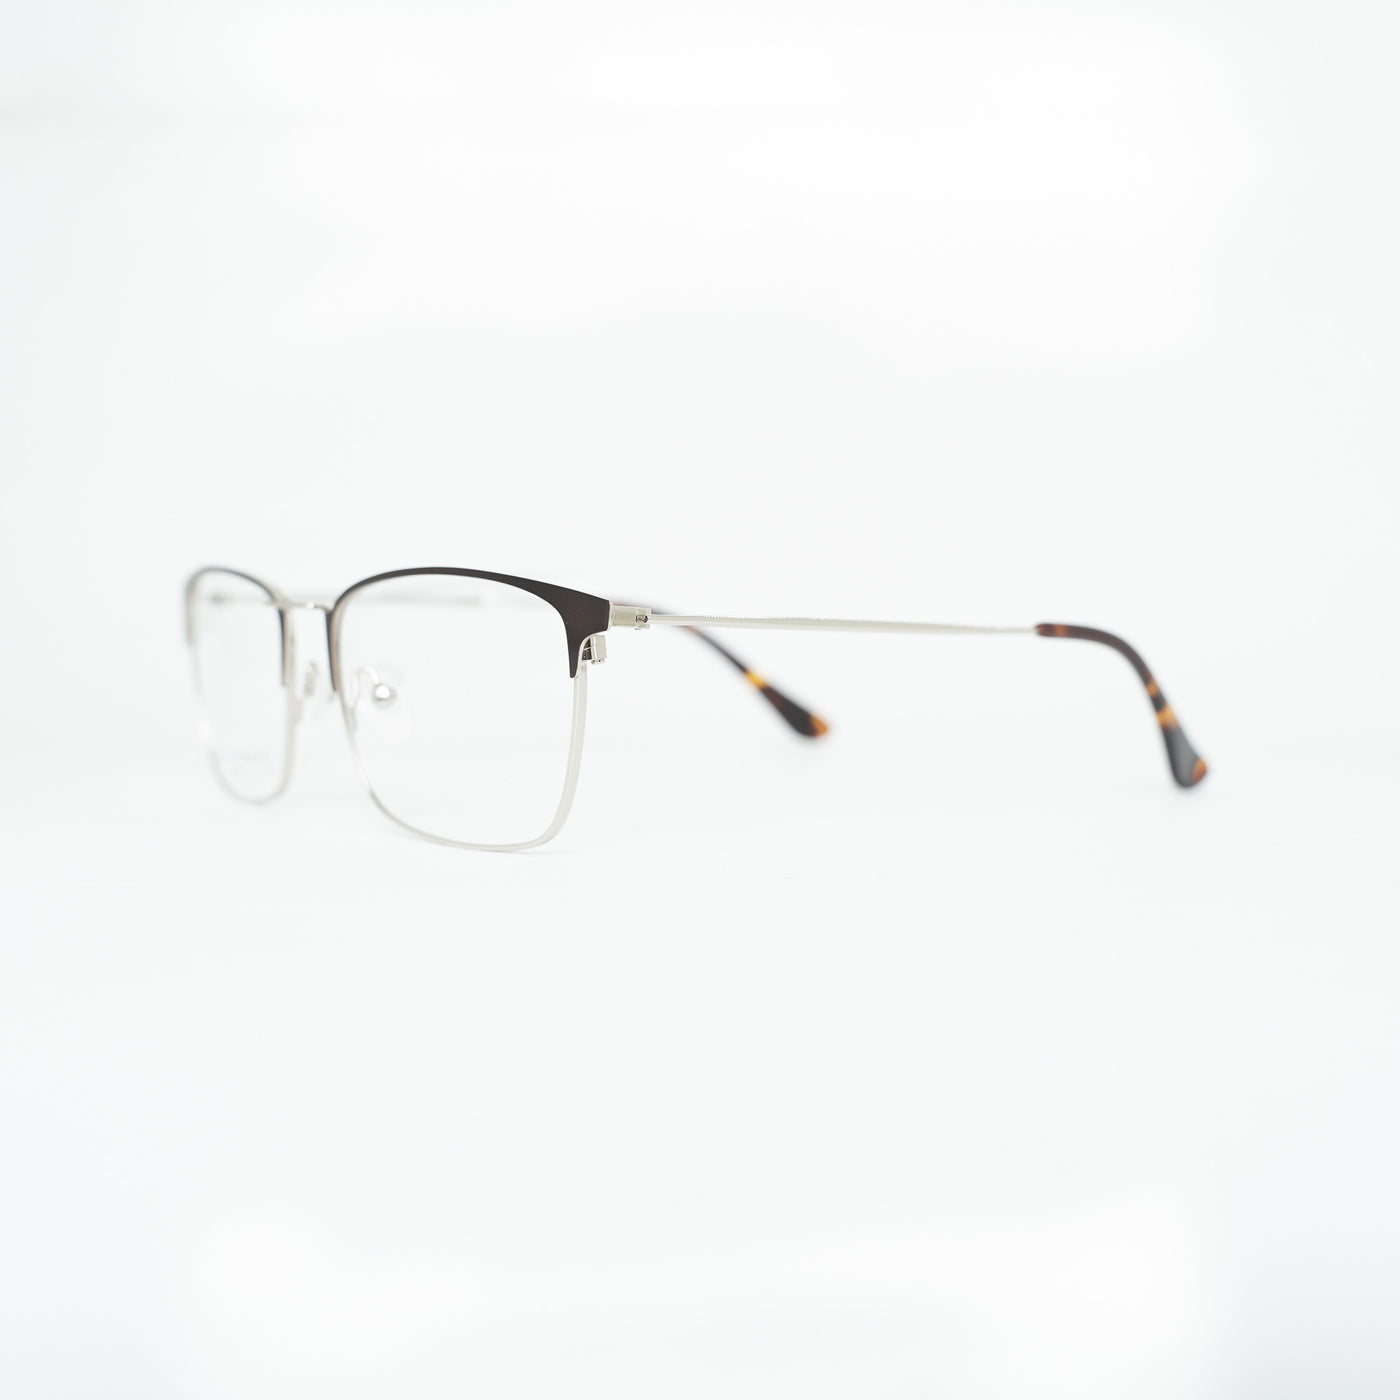 Tony Morgan TM4291BRWN51 | Eyeglasses - Vision Express Optical Philippines